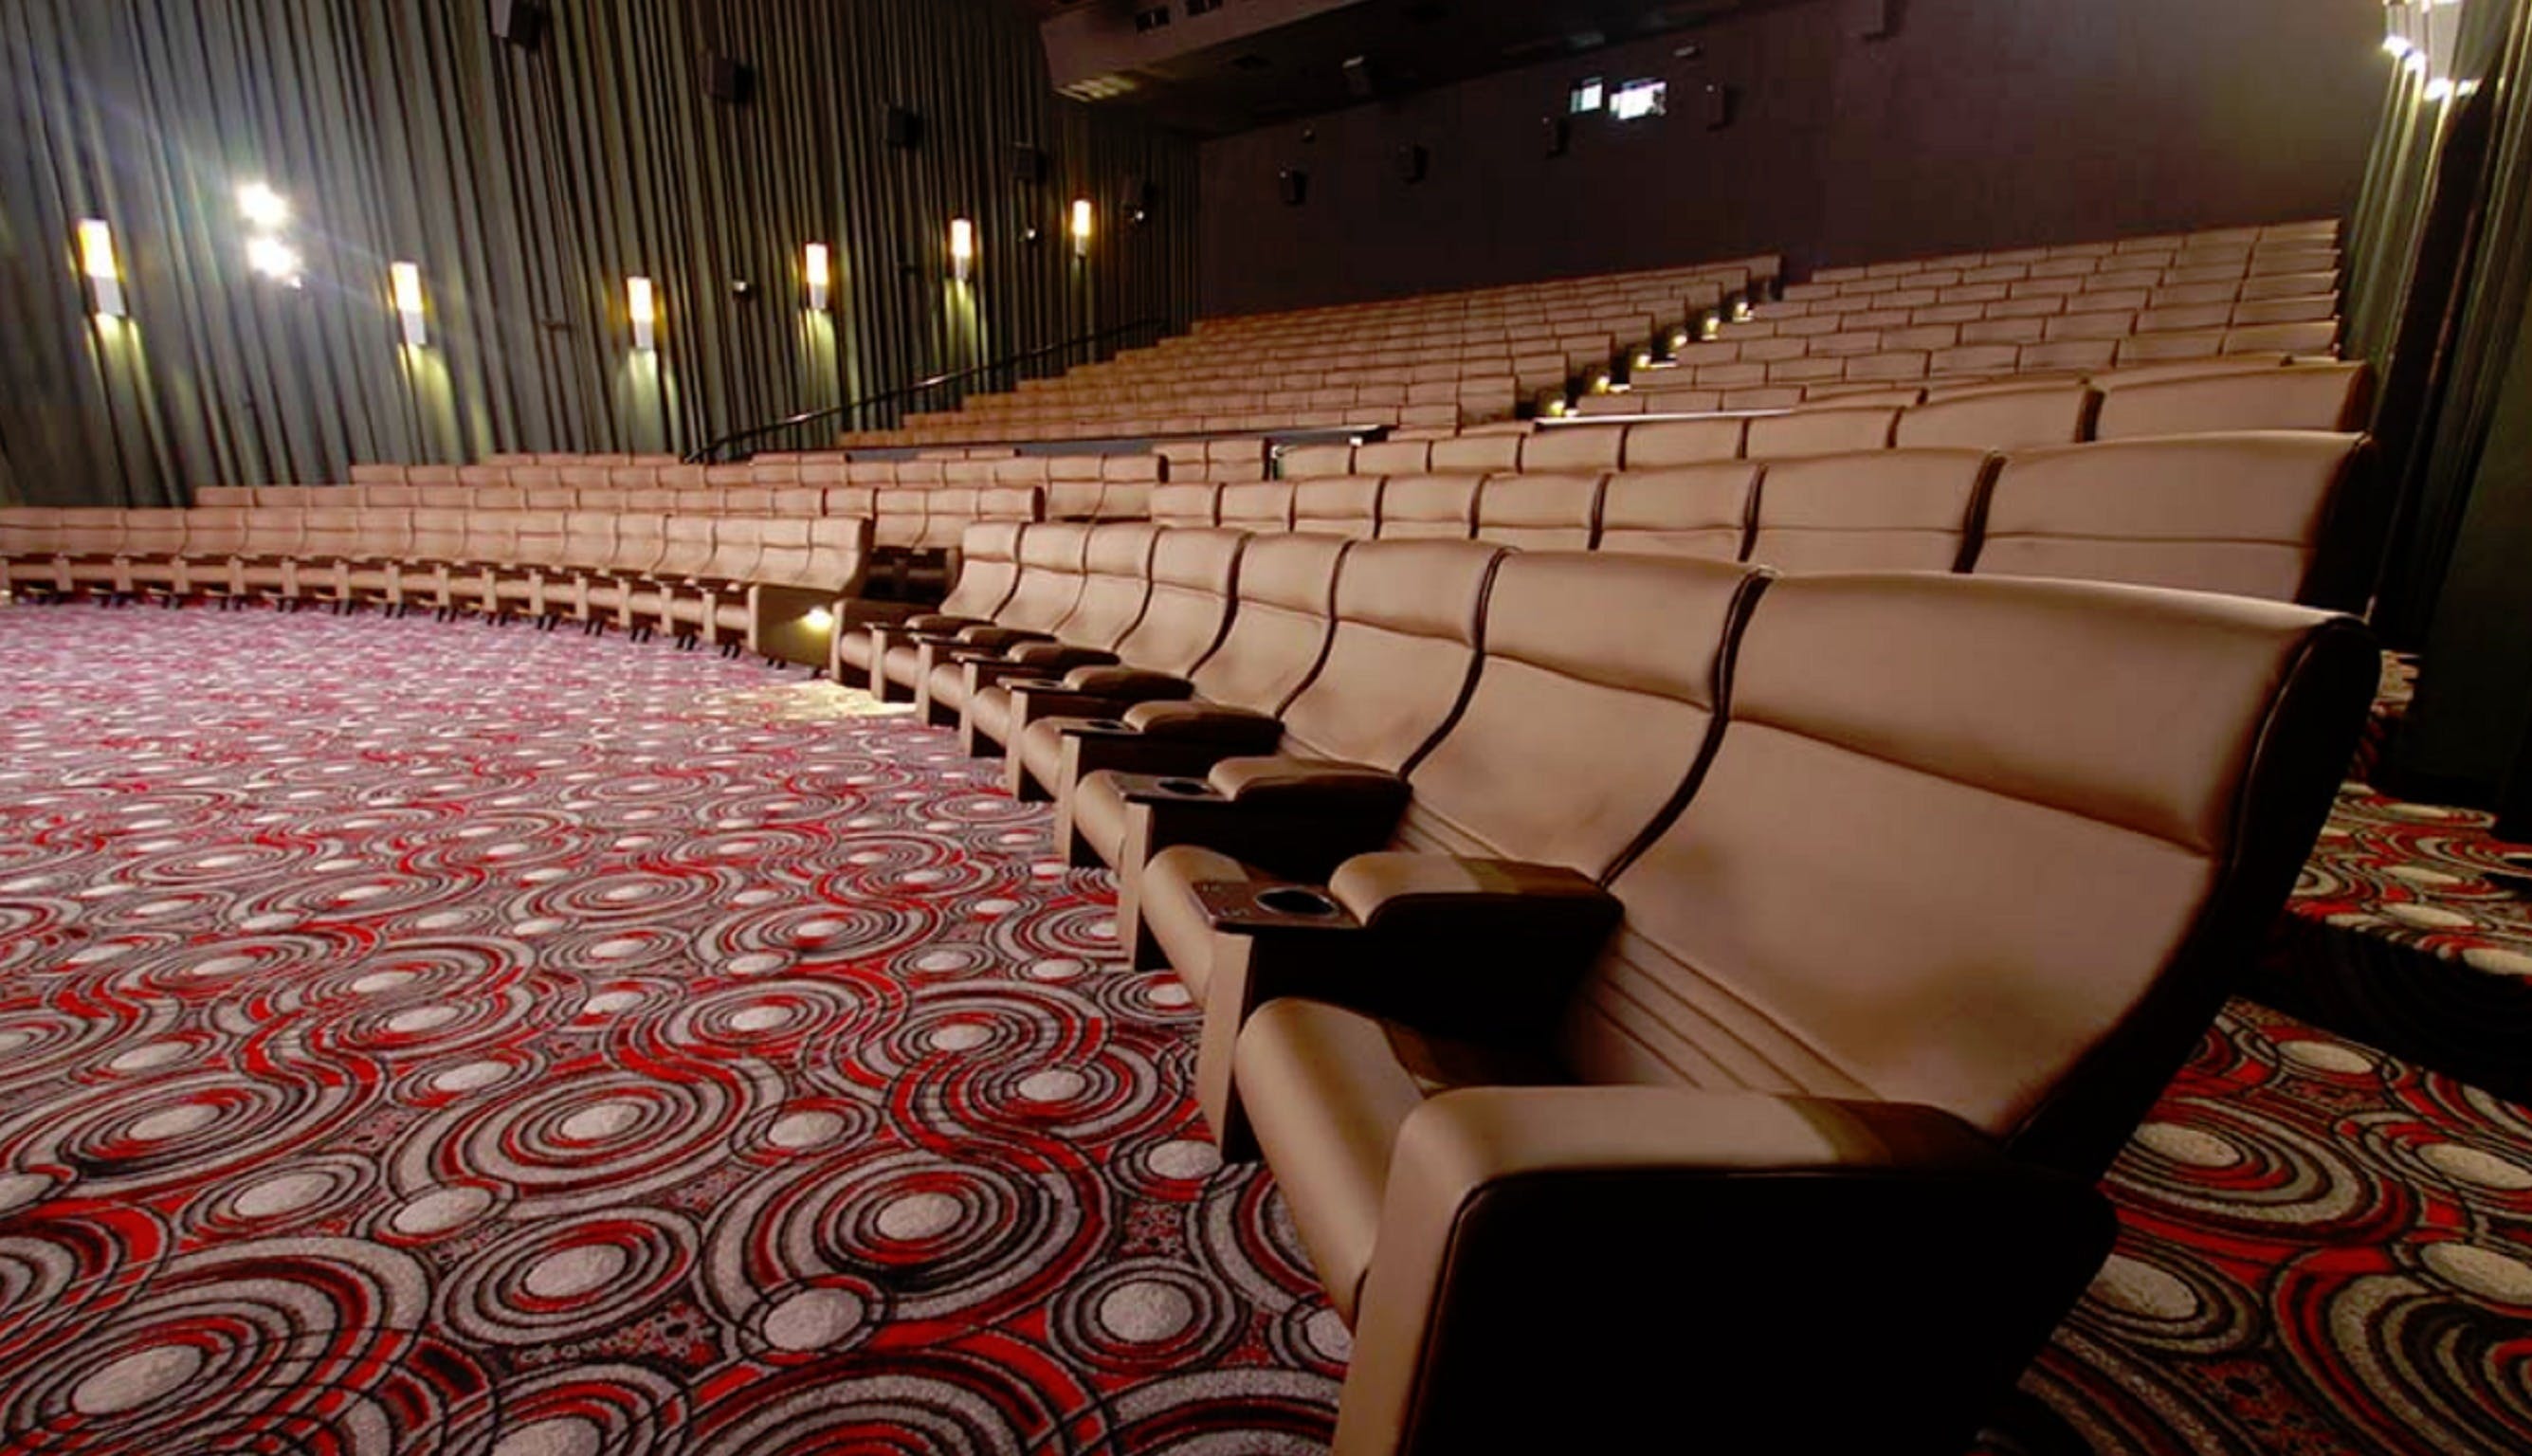 Grand Cinemas - Armadale - Redcliffe Tourism